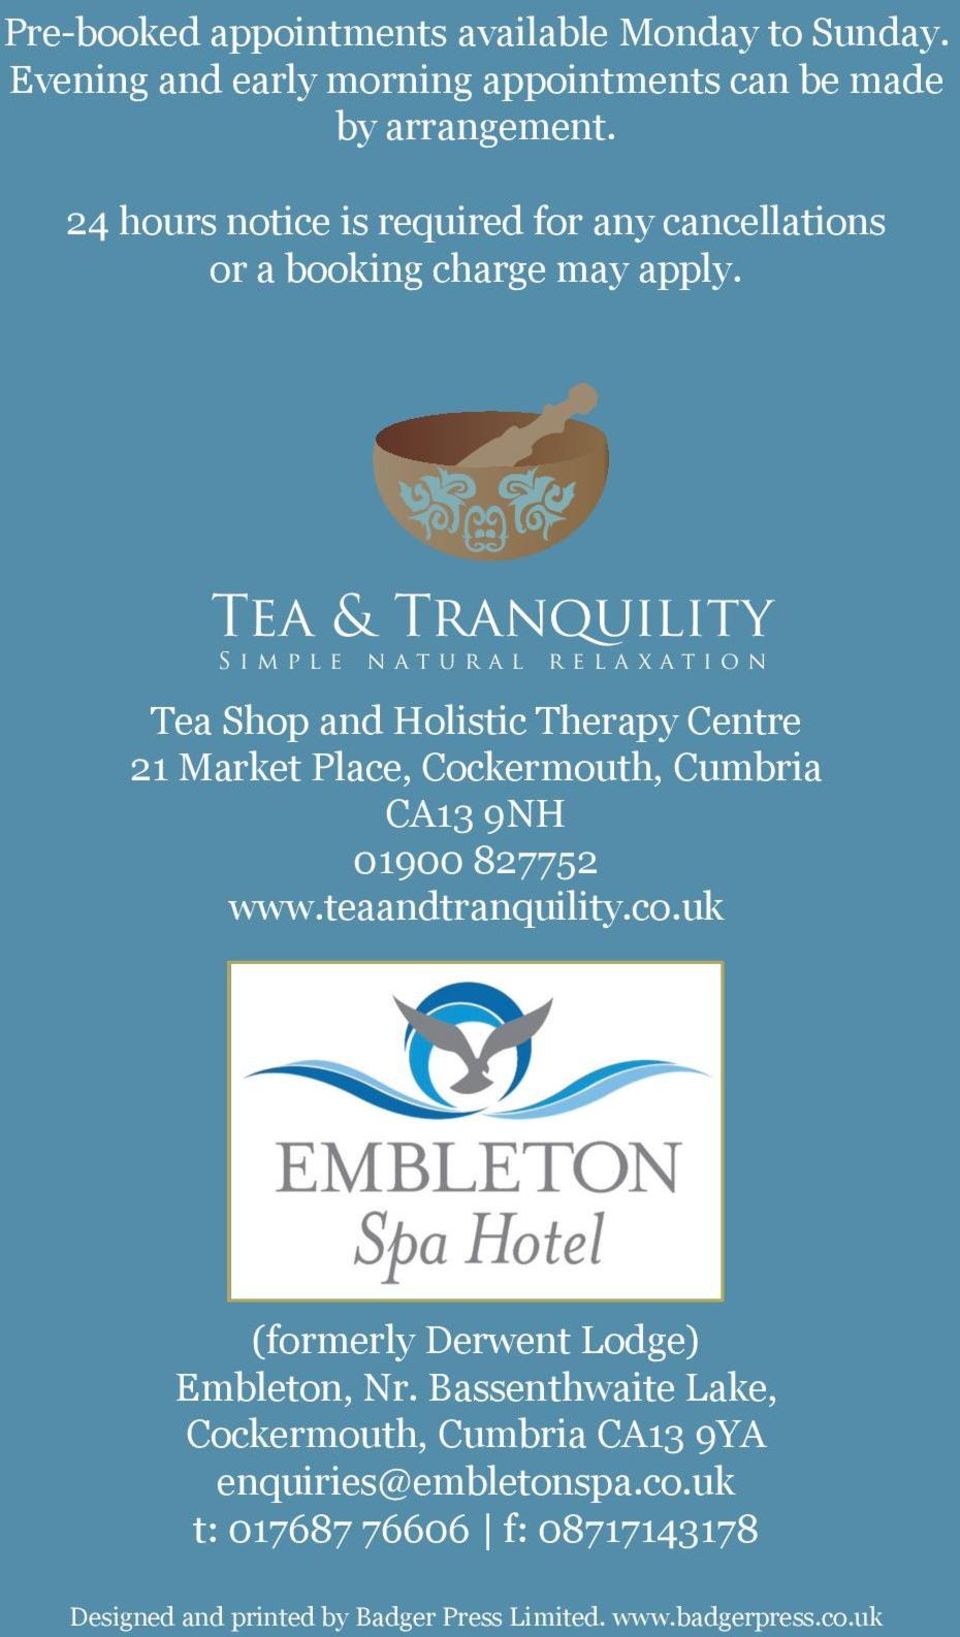 Tea & Tranquility S i m p l e n a t u r a l r e l a x a t i o n Tea Shop and Holistic Therapy Centre 21 Market Place, Cockermouth, Cumbria CA13 9NH